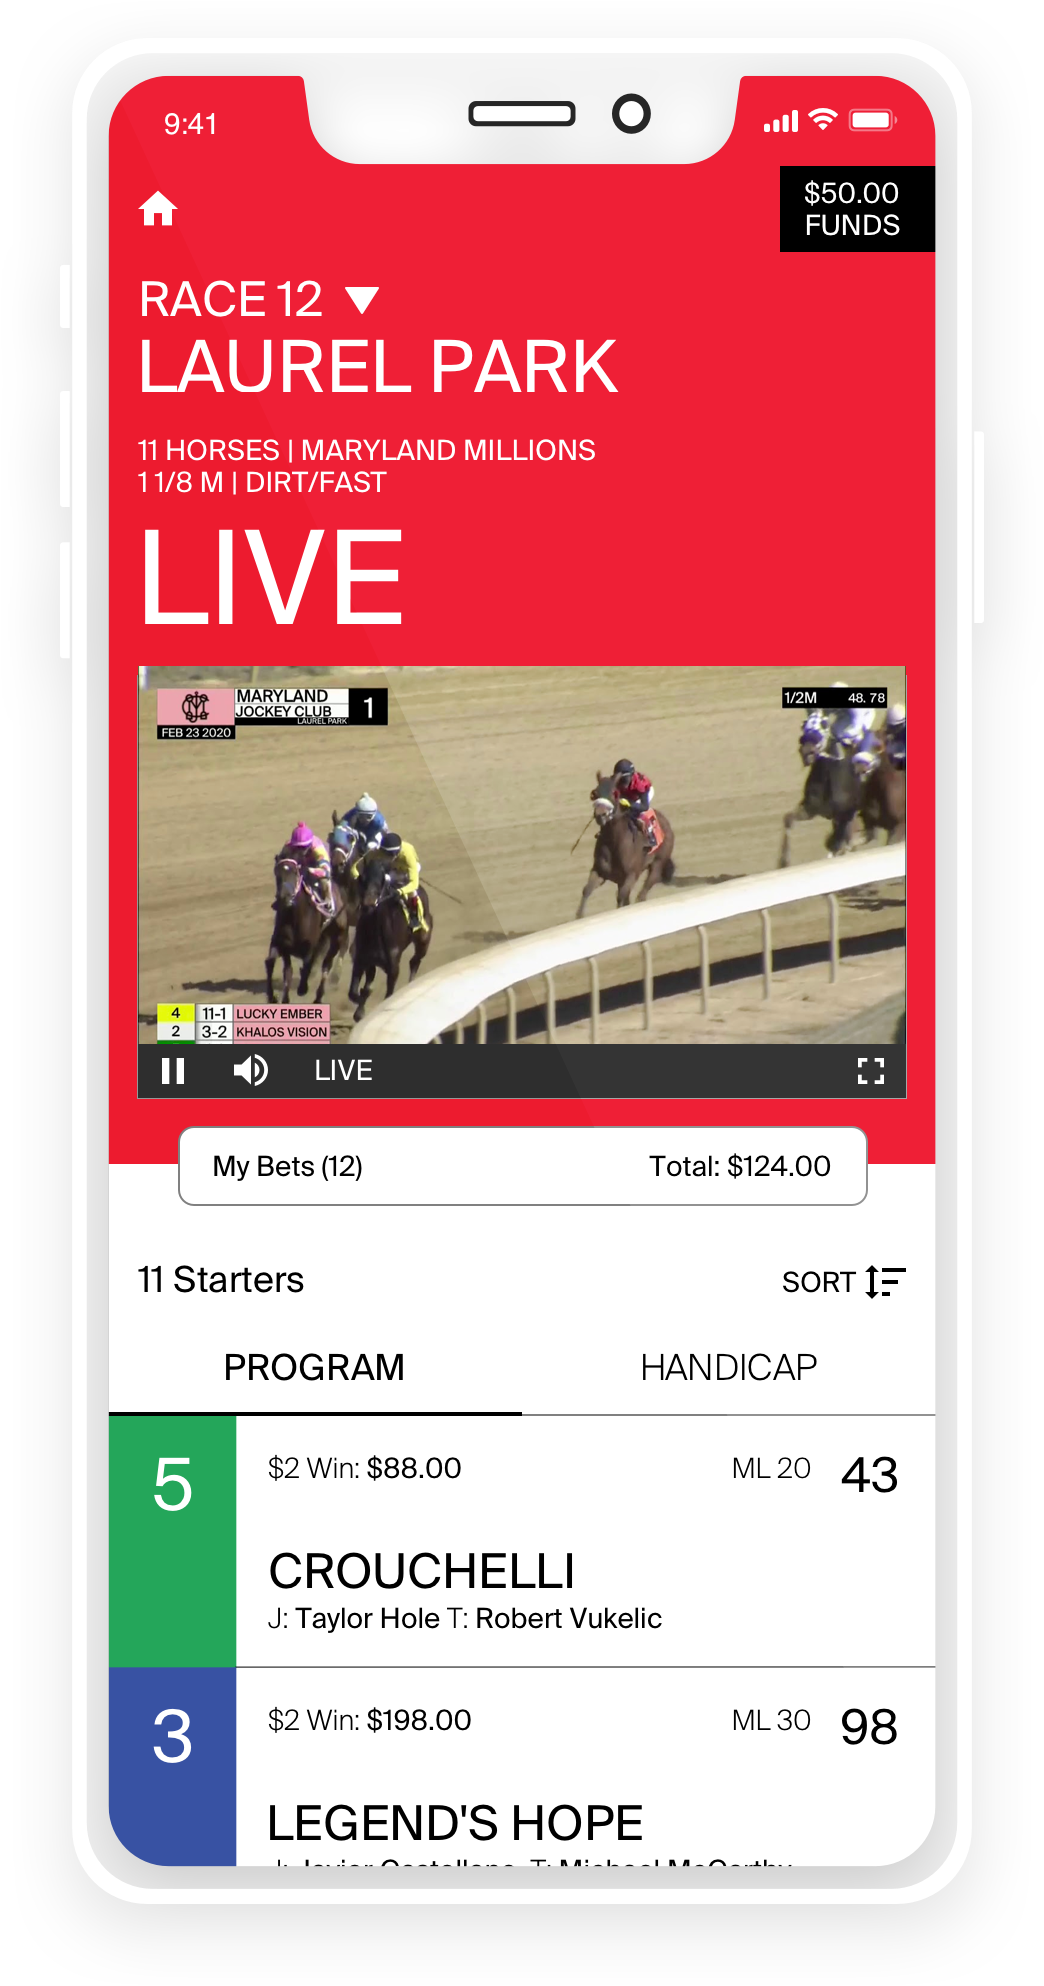 1st bet online horse racing betting at laurel park